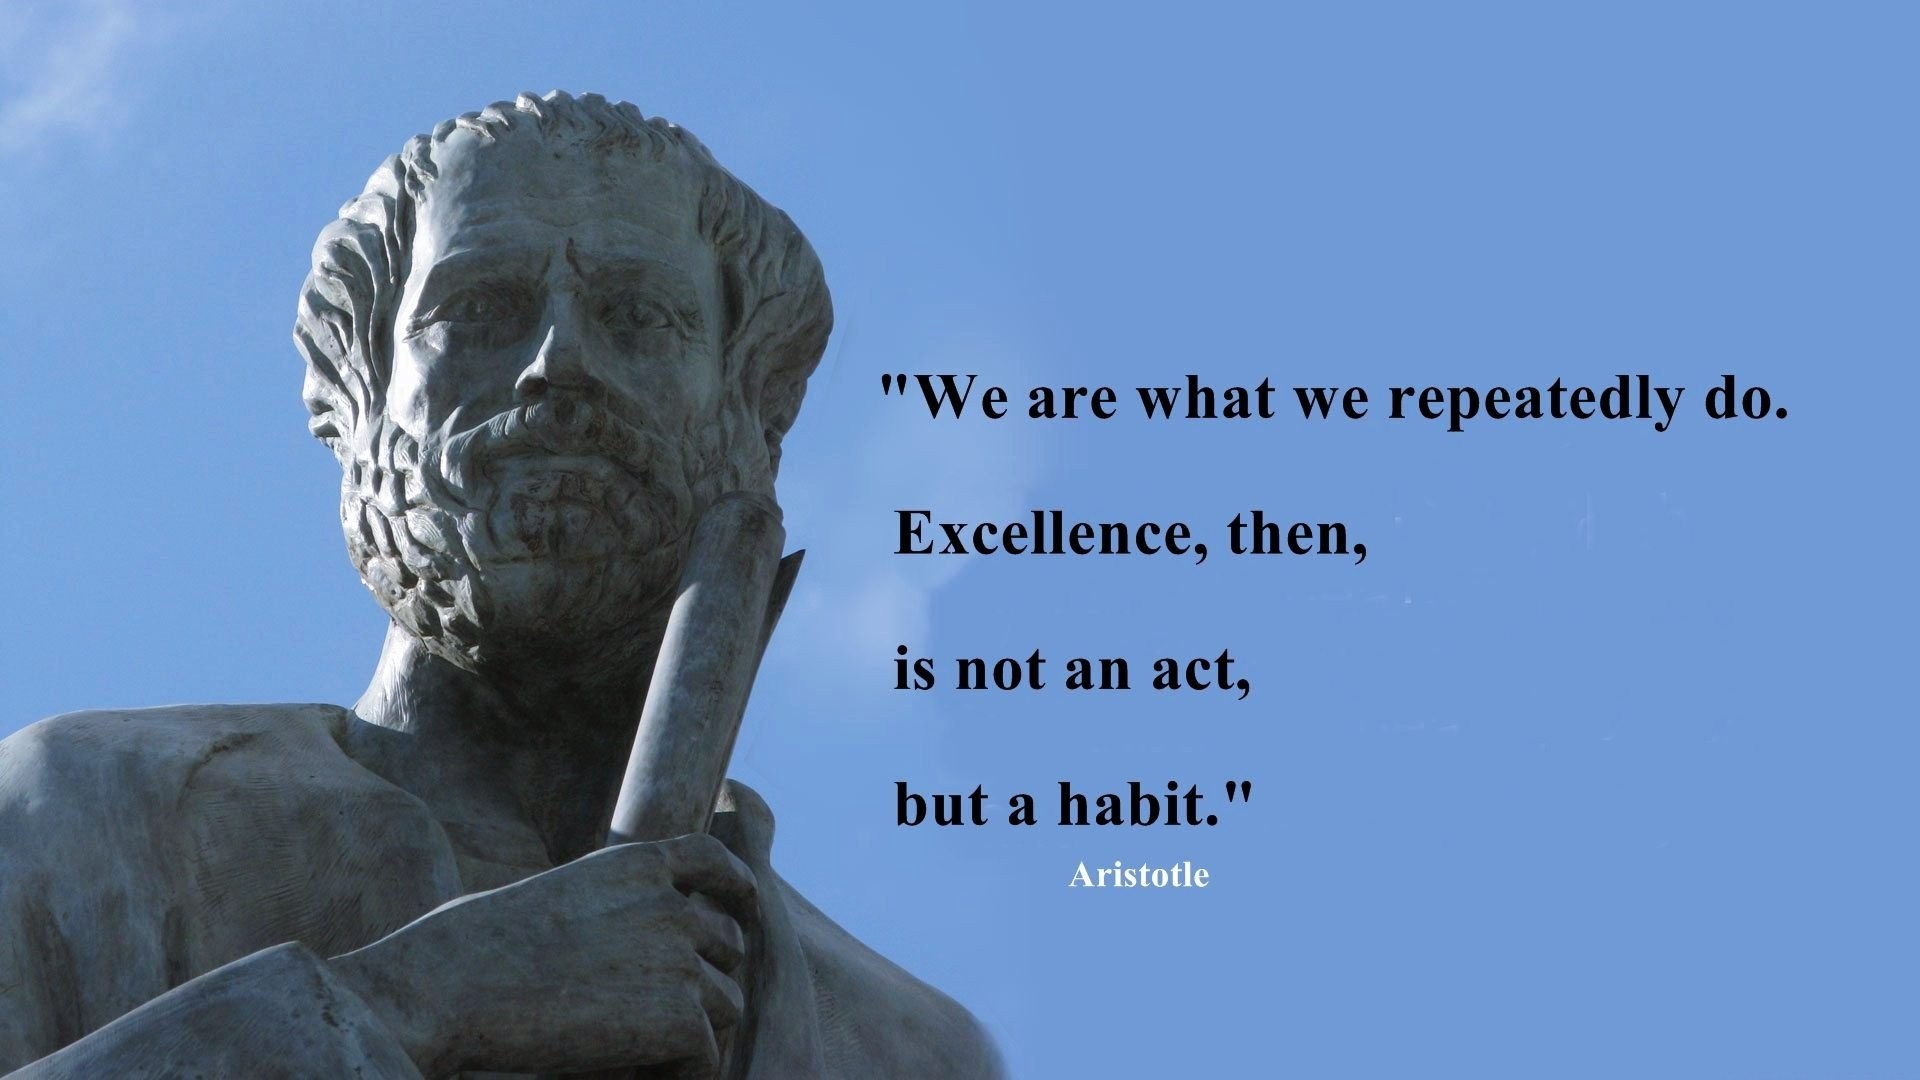 Aristotle Habit Quotes Wallpaper 00191 - Baltana